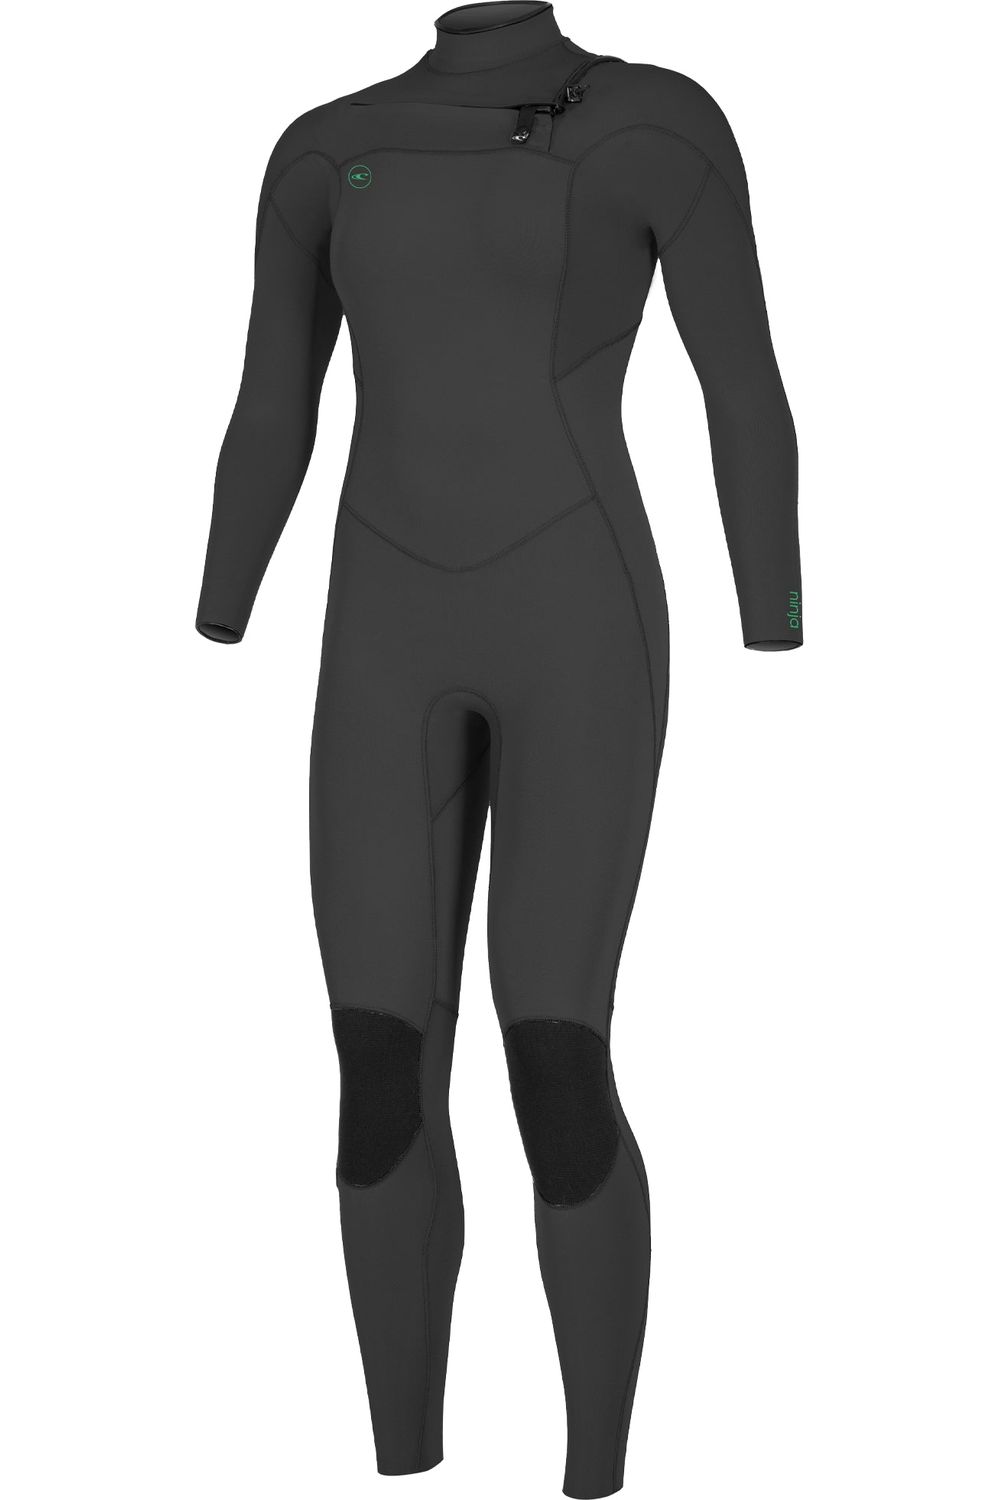 O'Neill Ninja Women's Wetsuit 4/3 Chest Zip Black